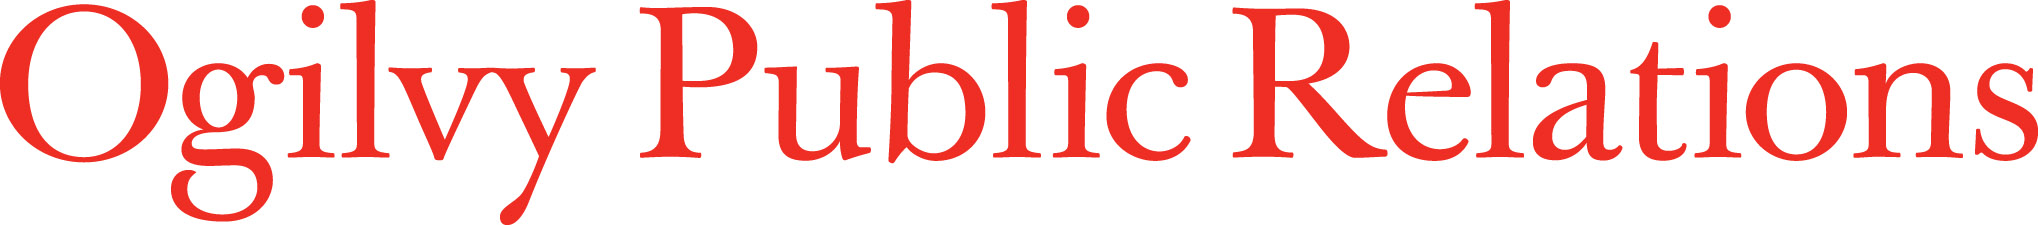  Leading Digital Public Relations Business Logo: Ogilvy Public Relations